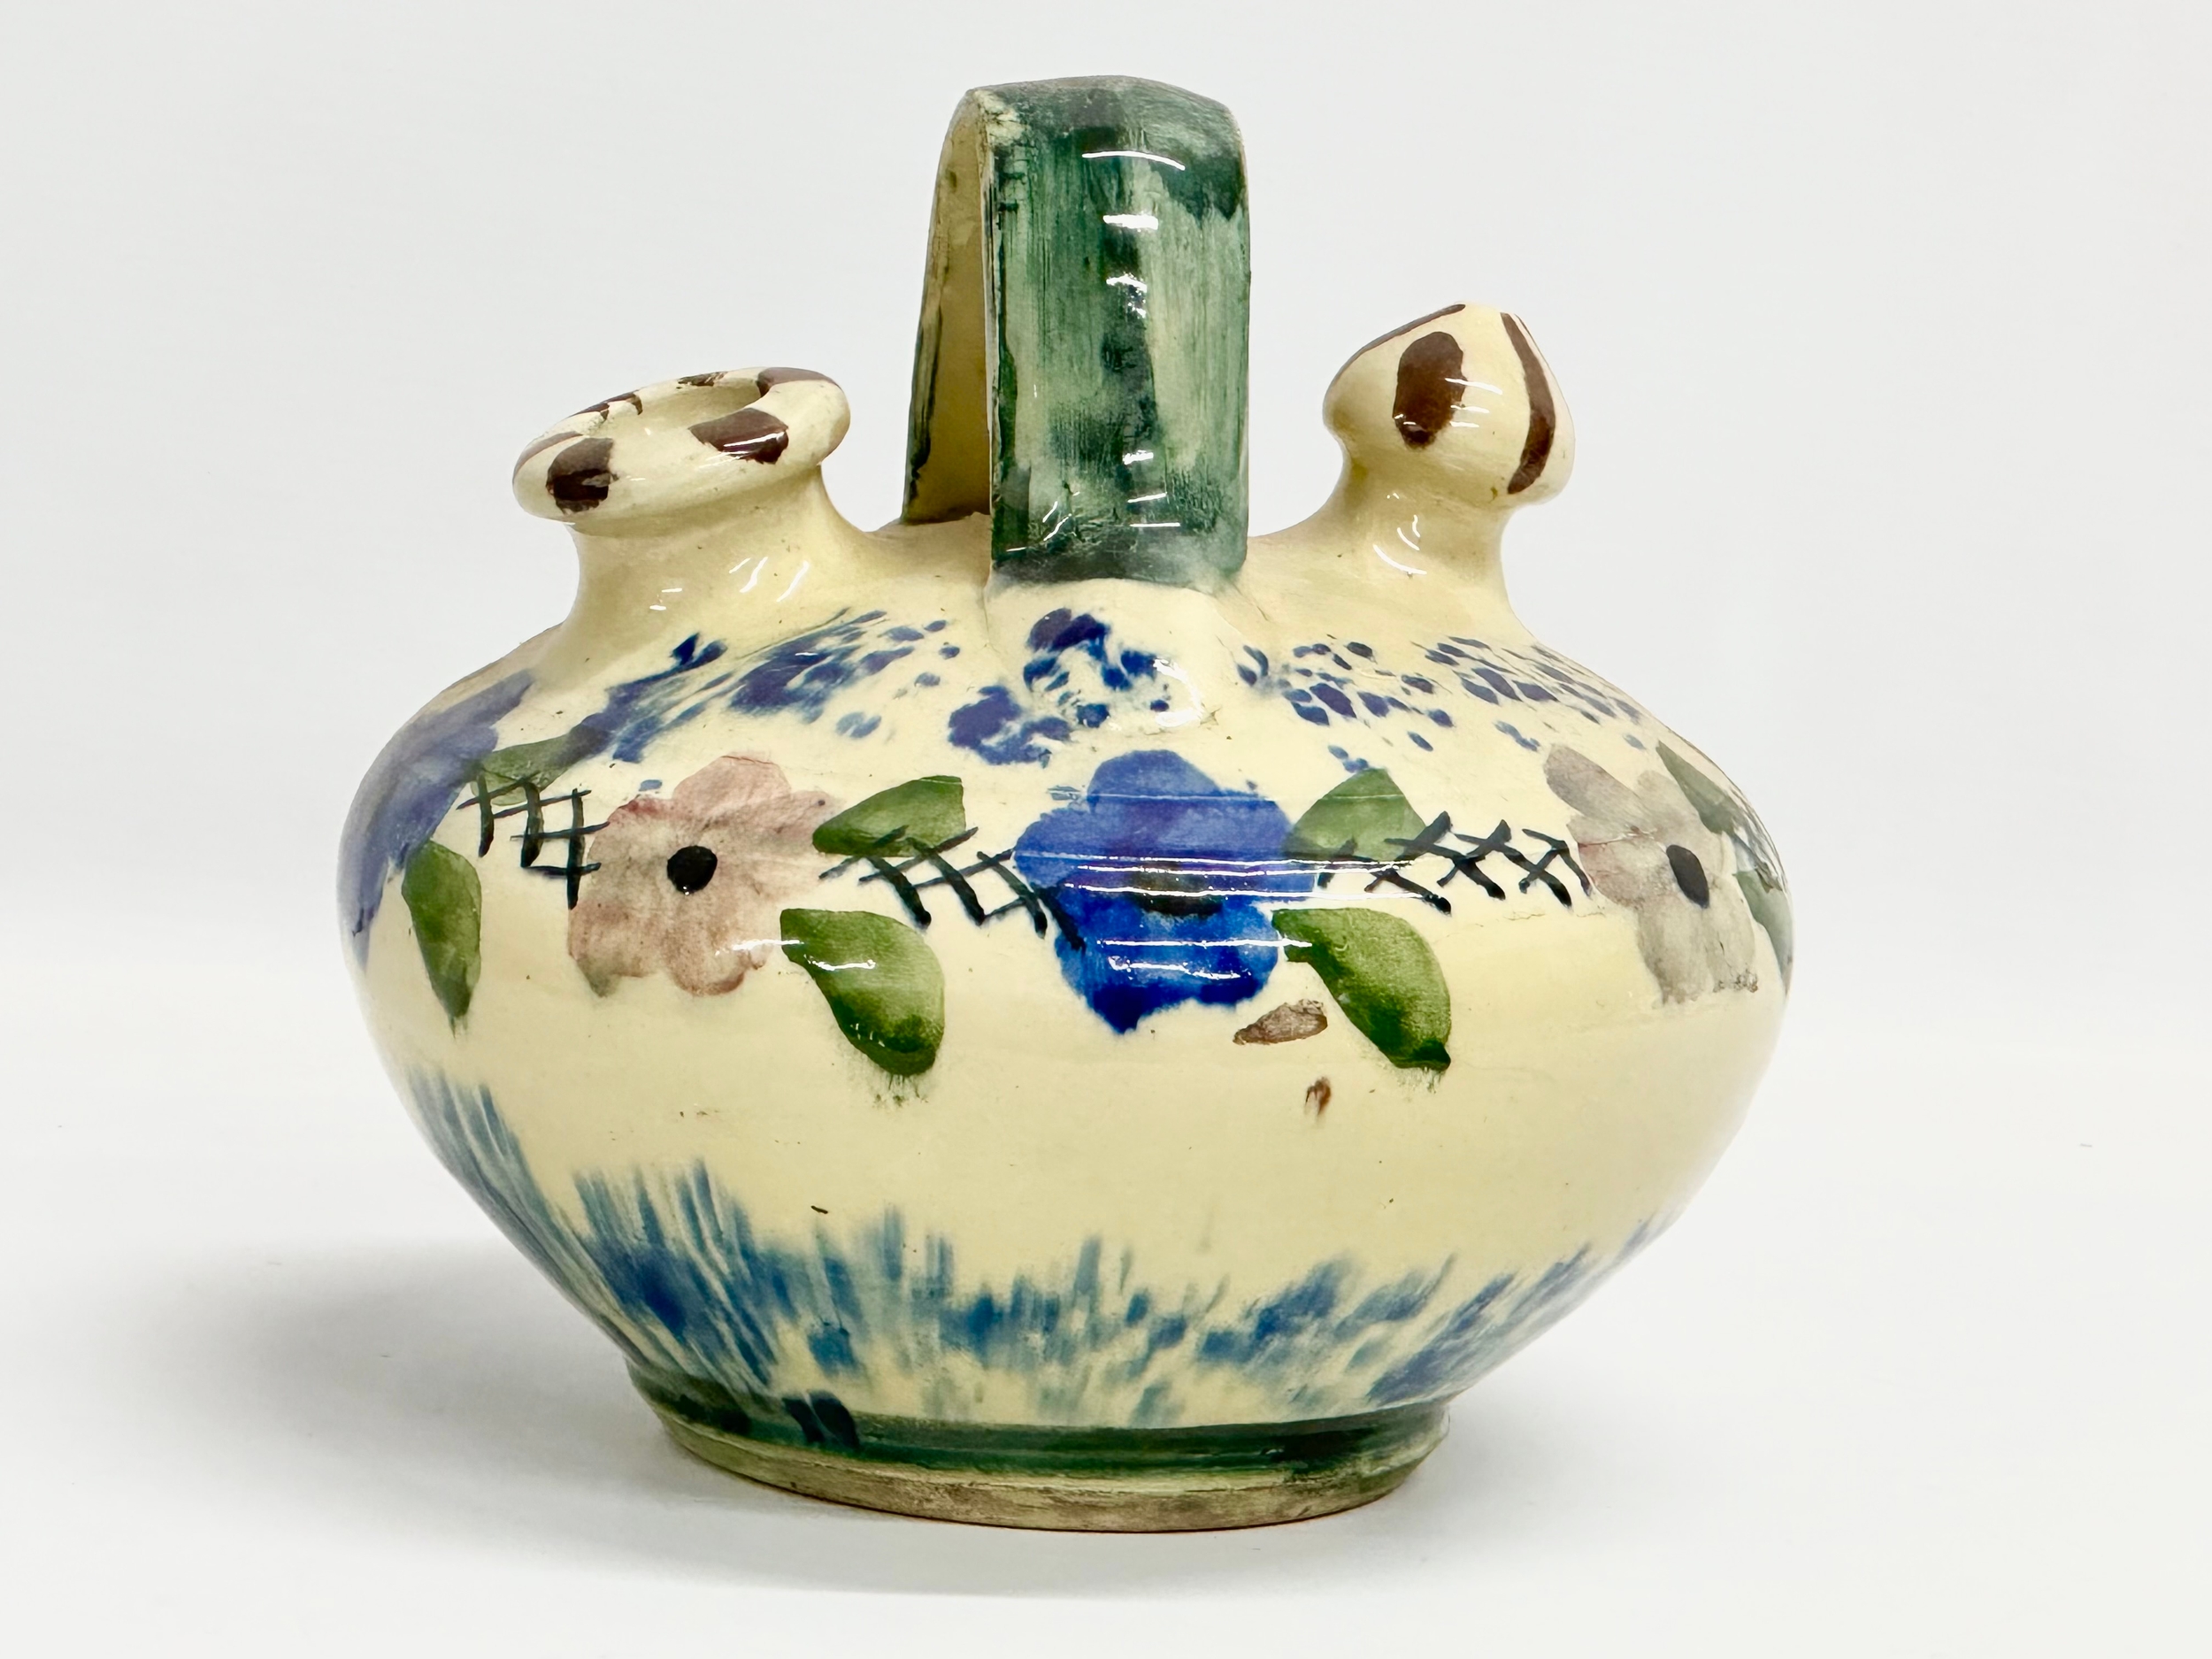 An early 20th century French glazed earthenware Gargoulette jug/wine jug. 20x20x20cm